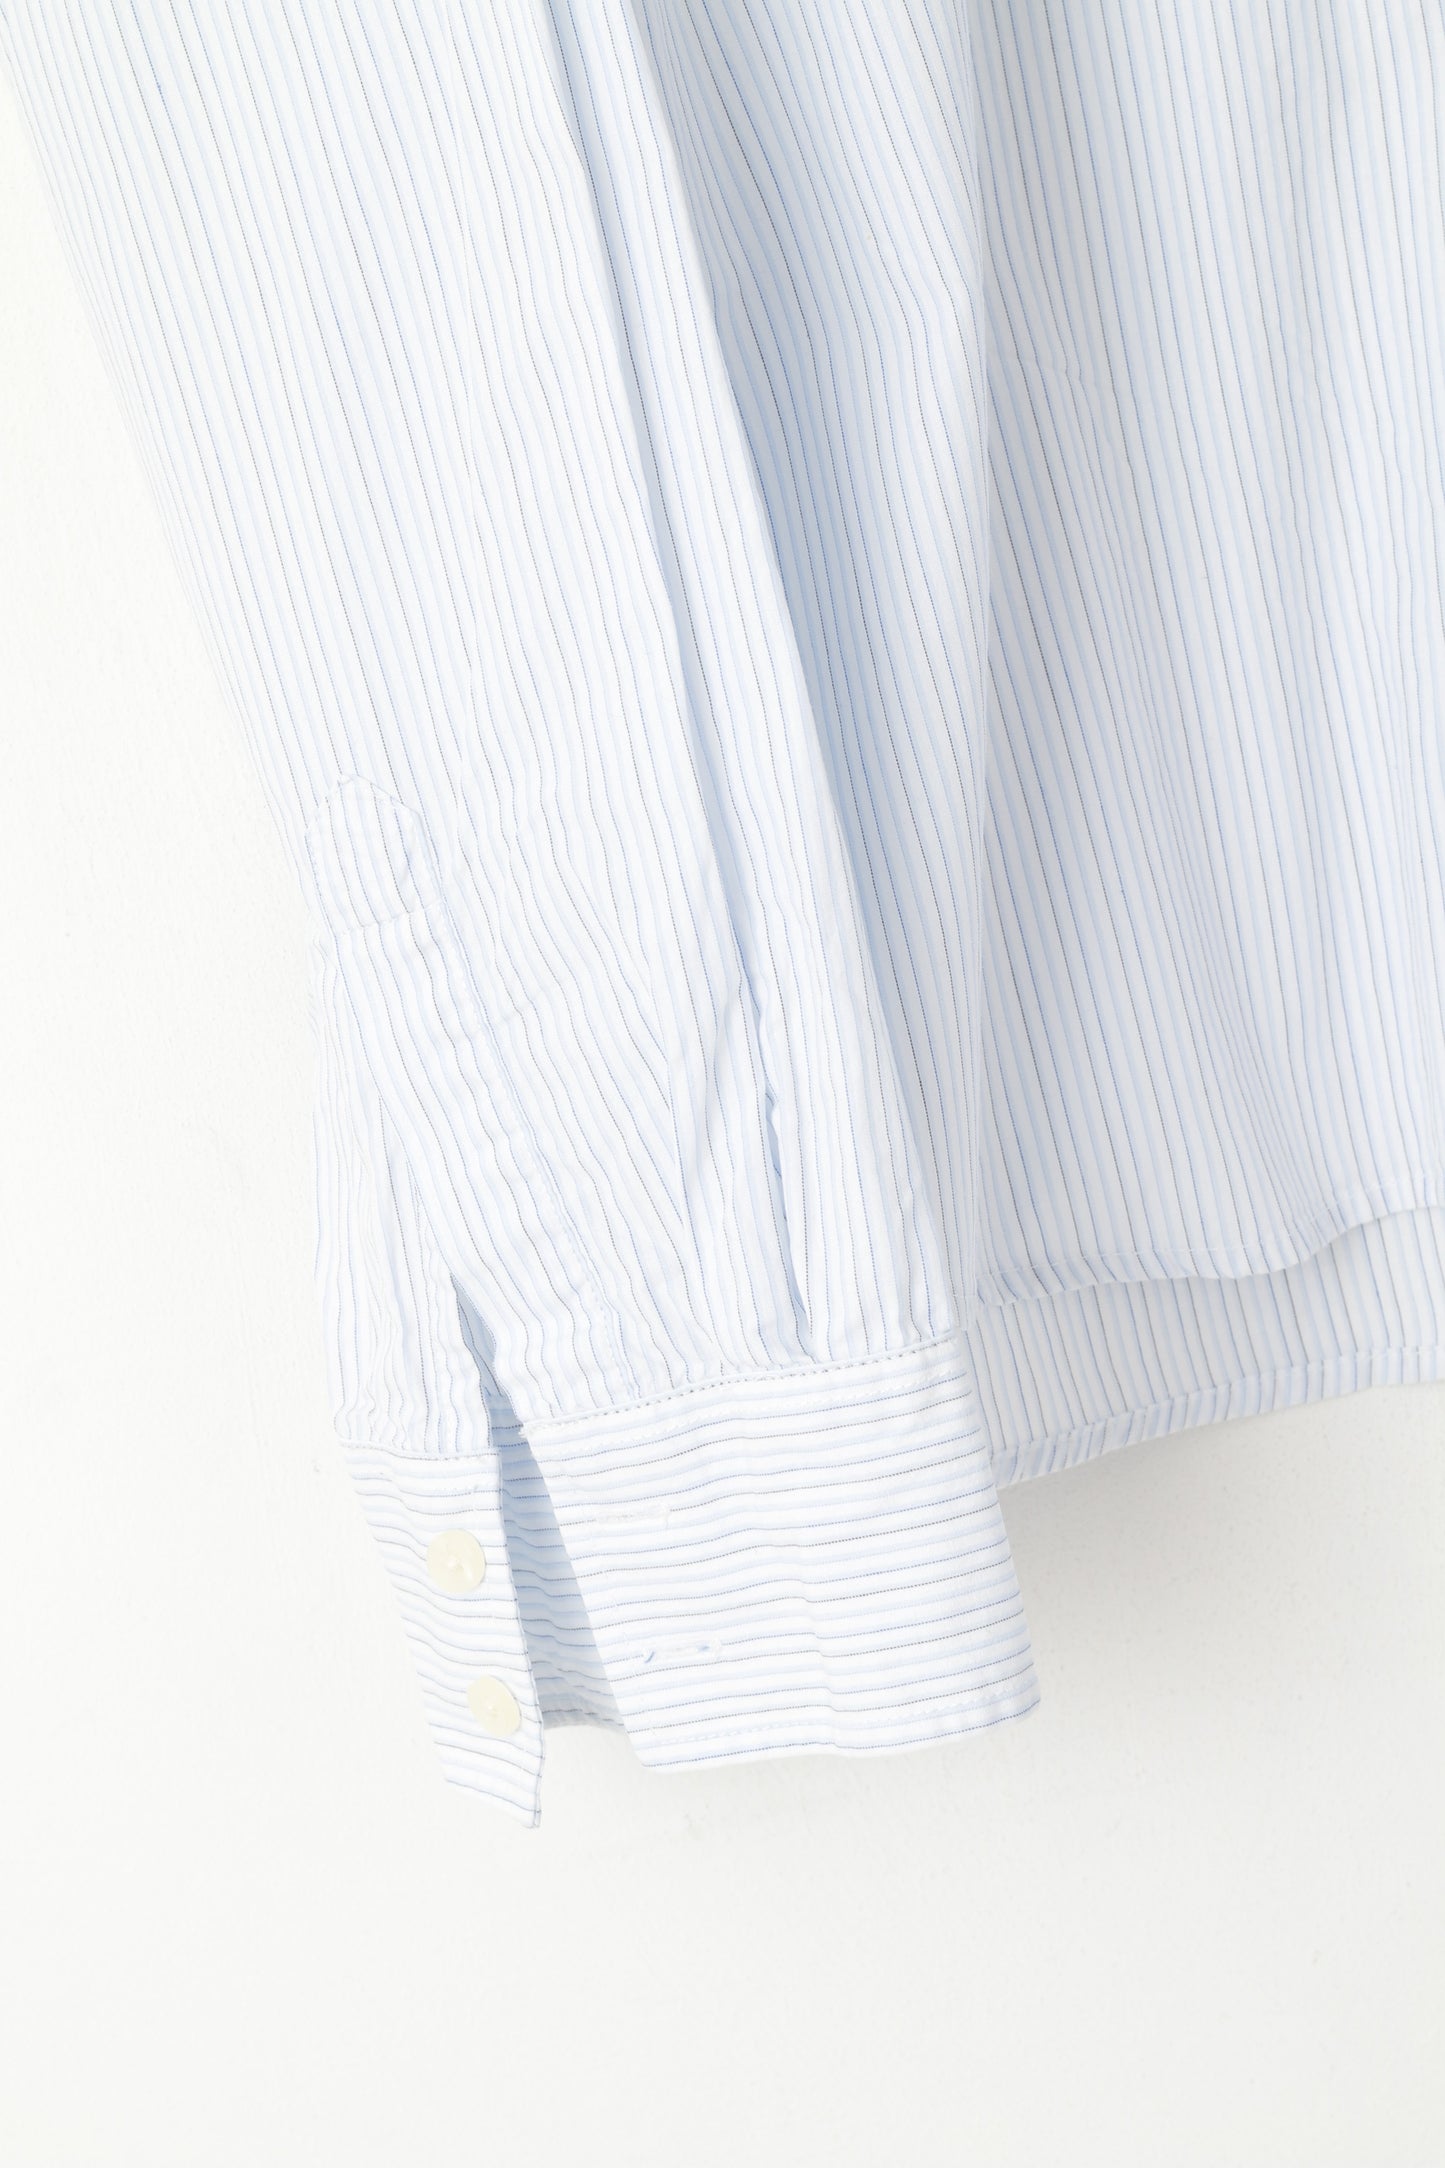 Levi's Men XXL Casual Shirt Blue White Striped Cotton Long Sleeve Top